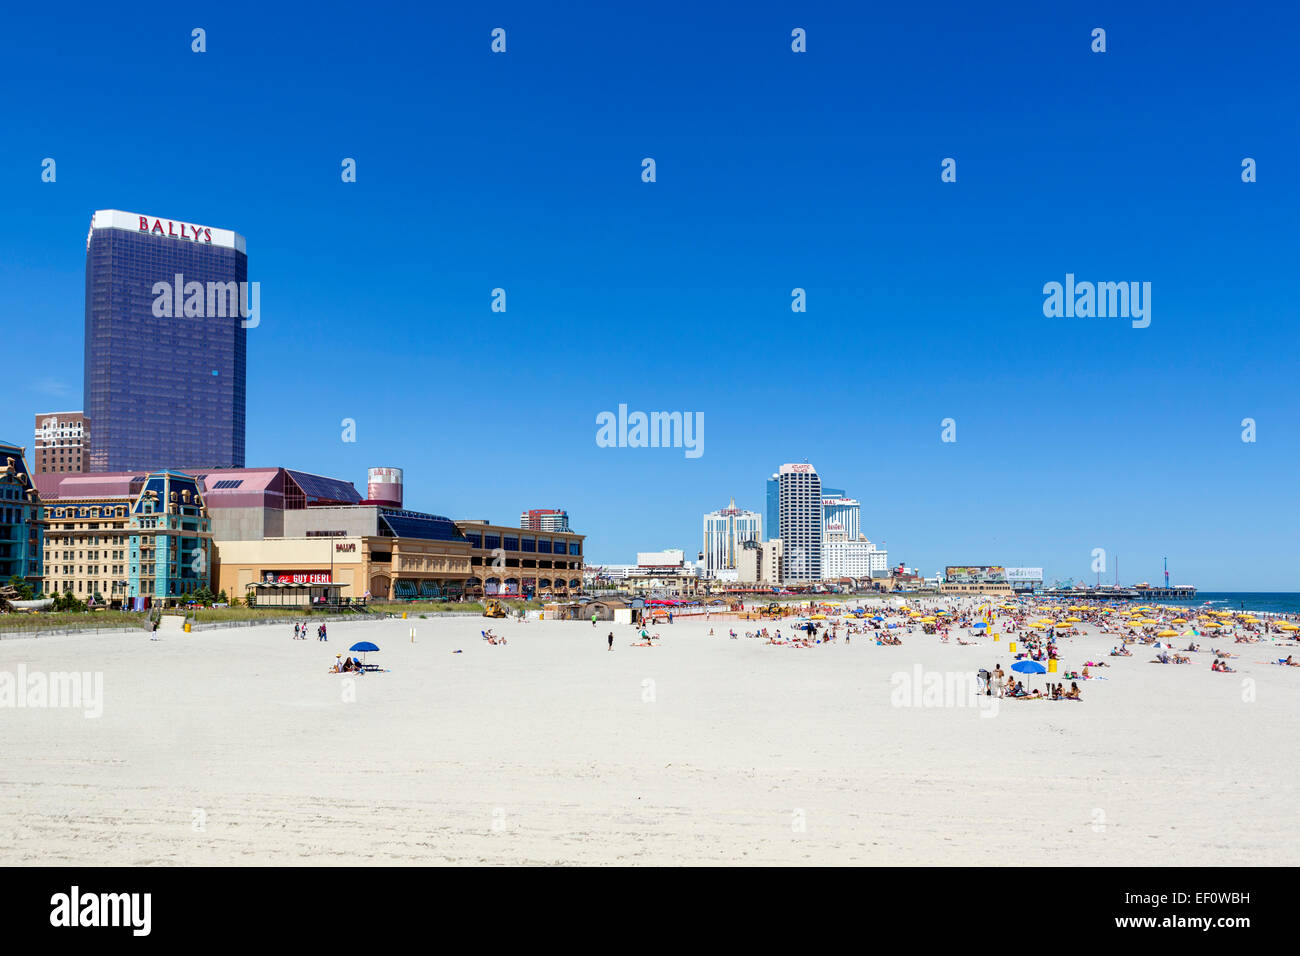 The beach in Atlantic City, New Jersey, USA Stock Photo